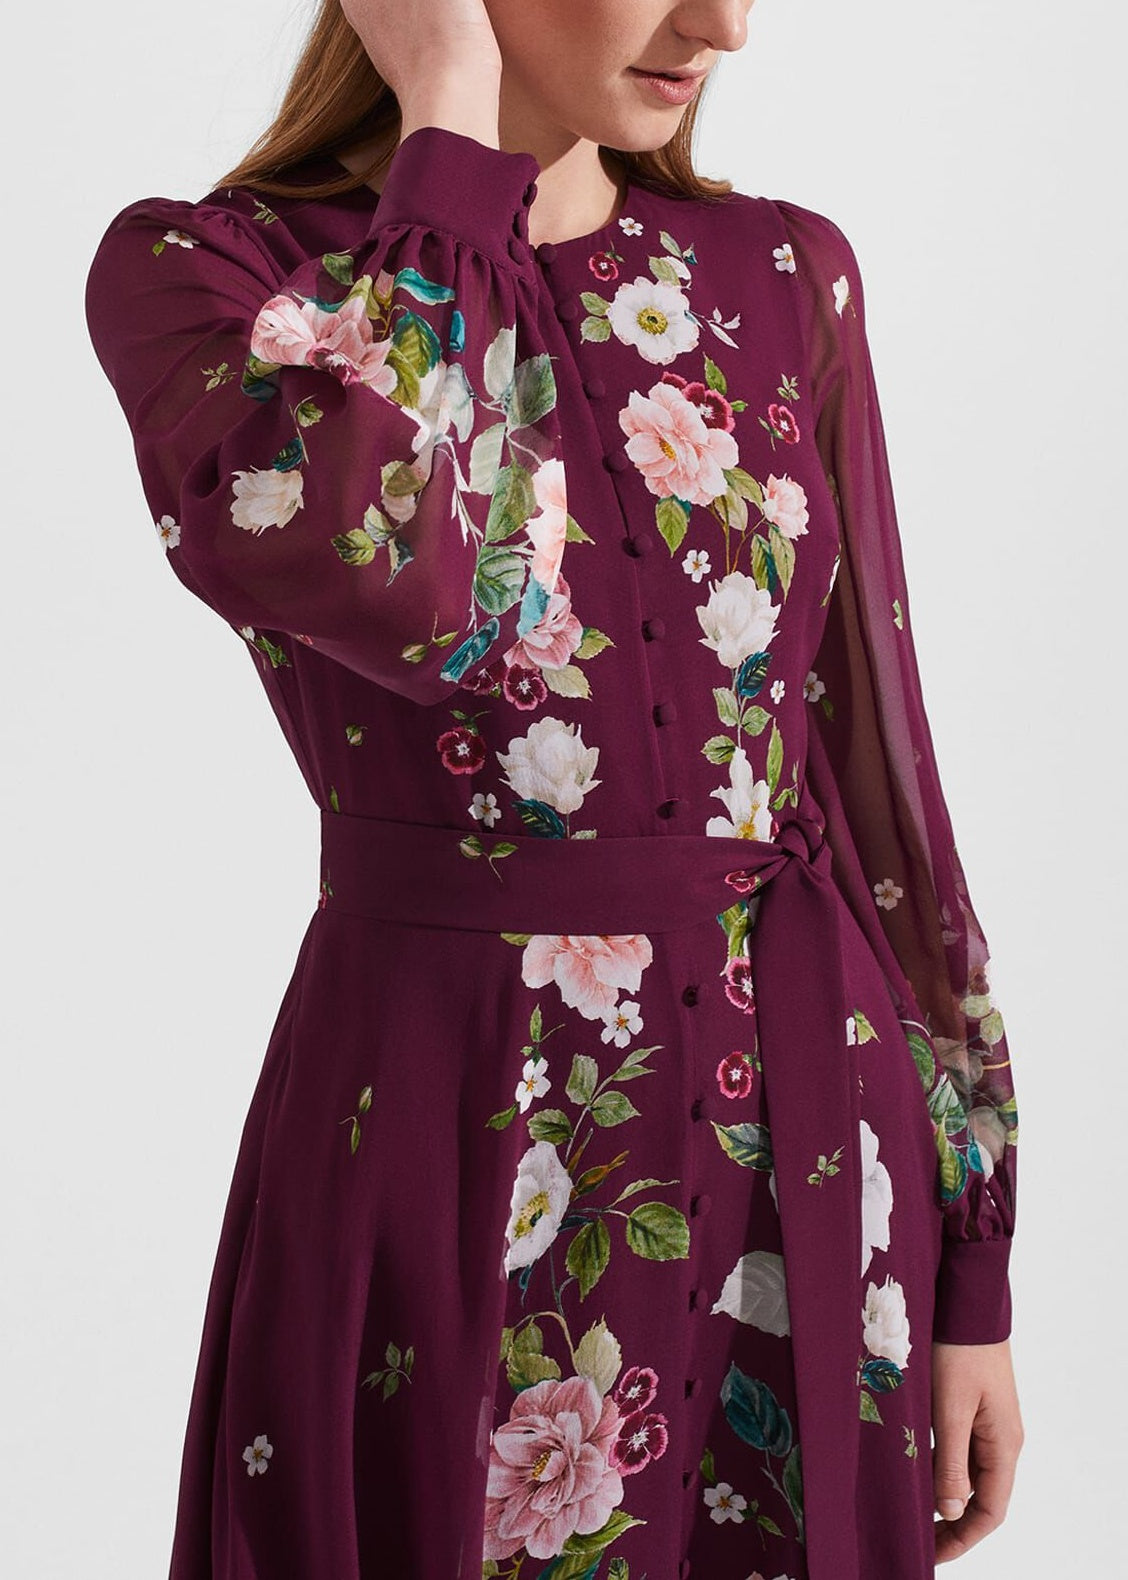 Maribella Silk Dress 0223/5516/3793l00 Burgundy-Multi